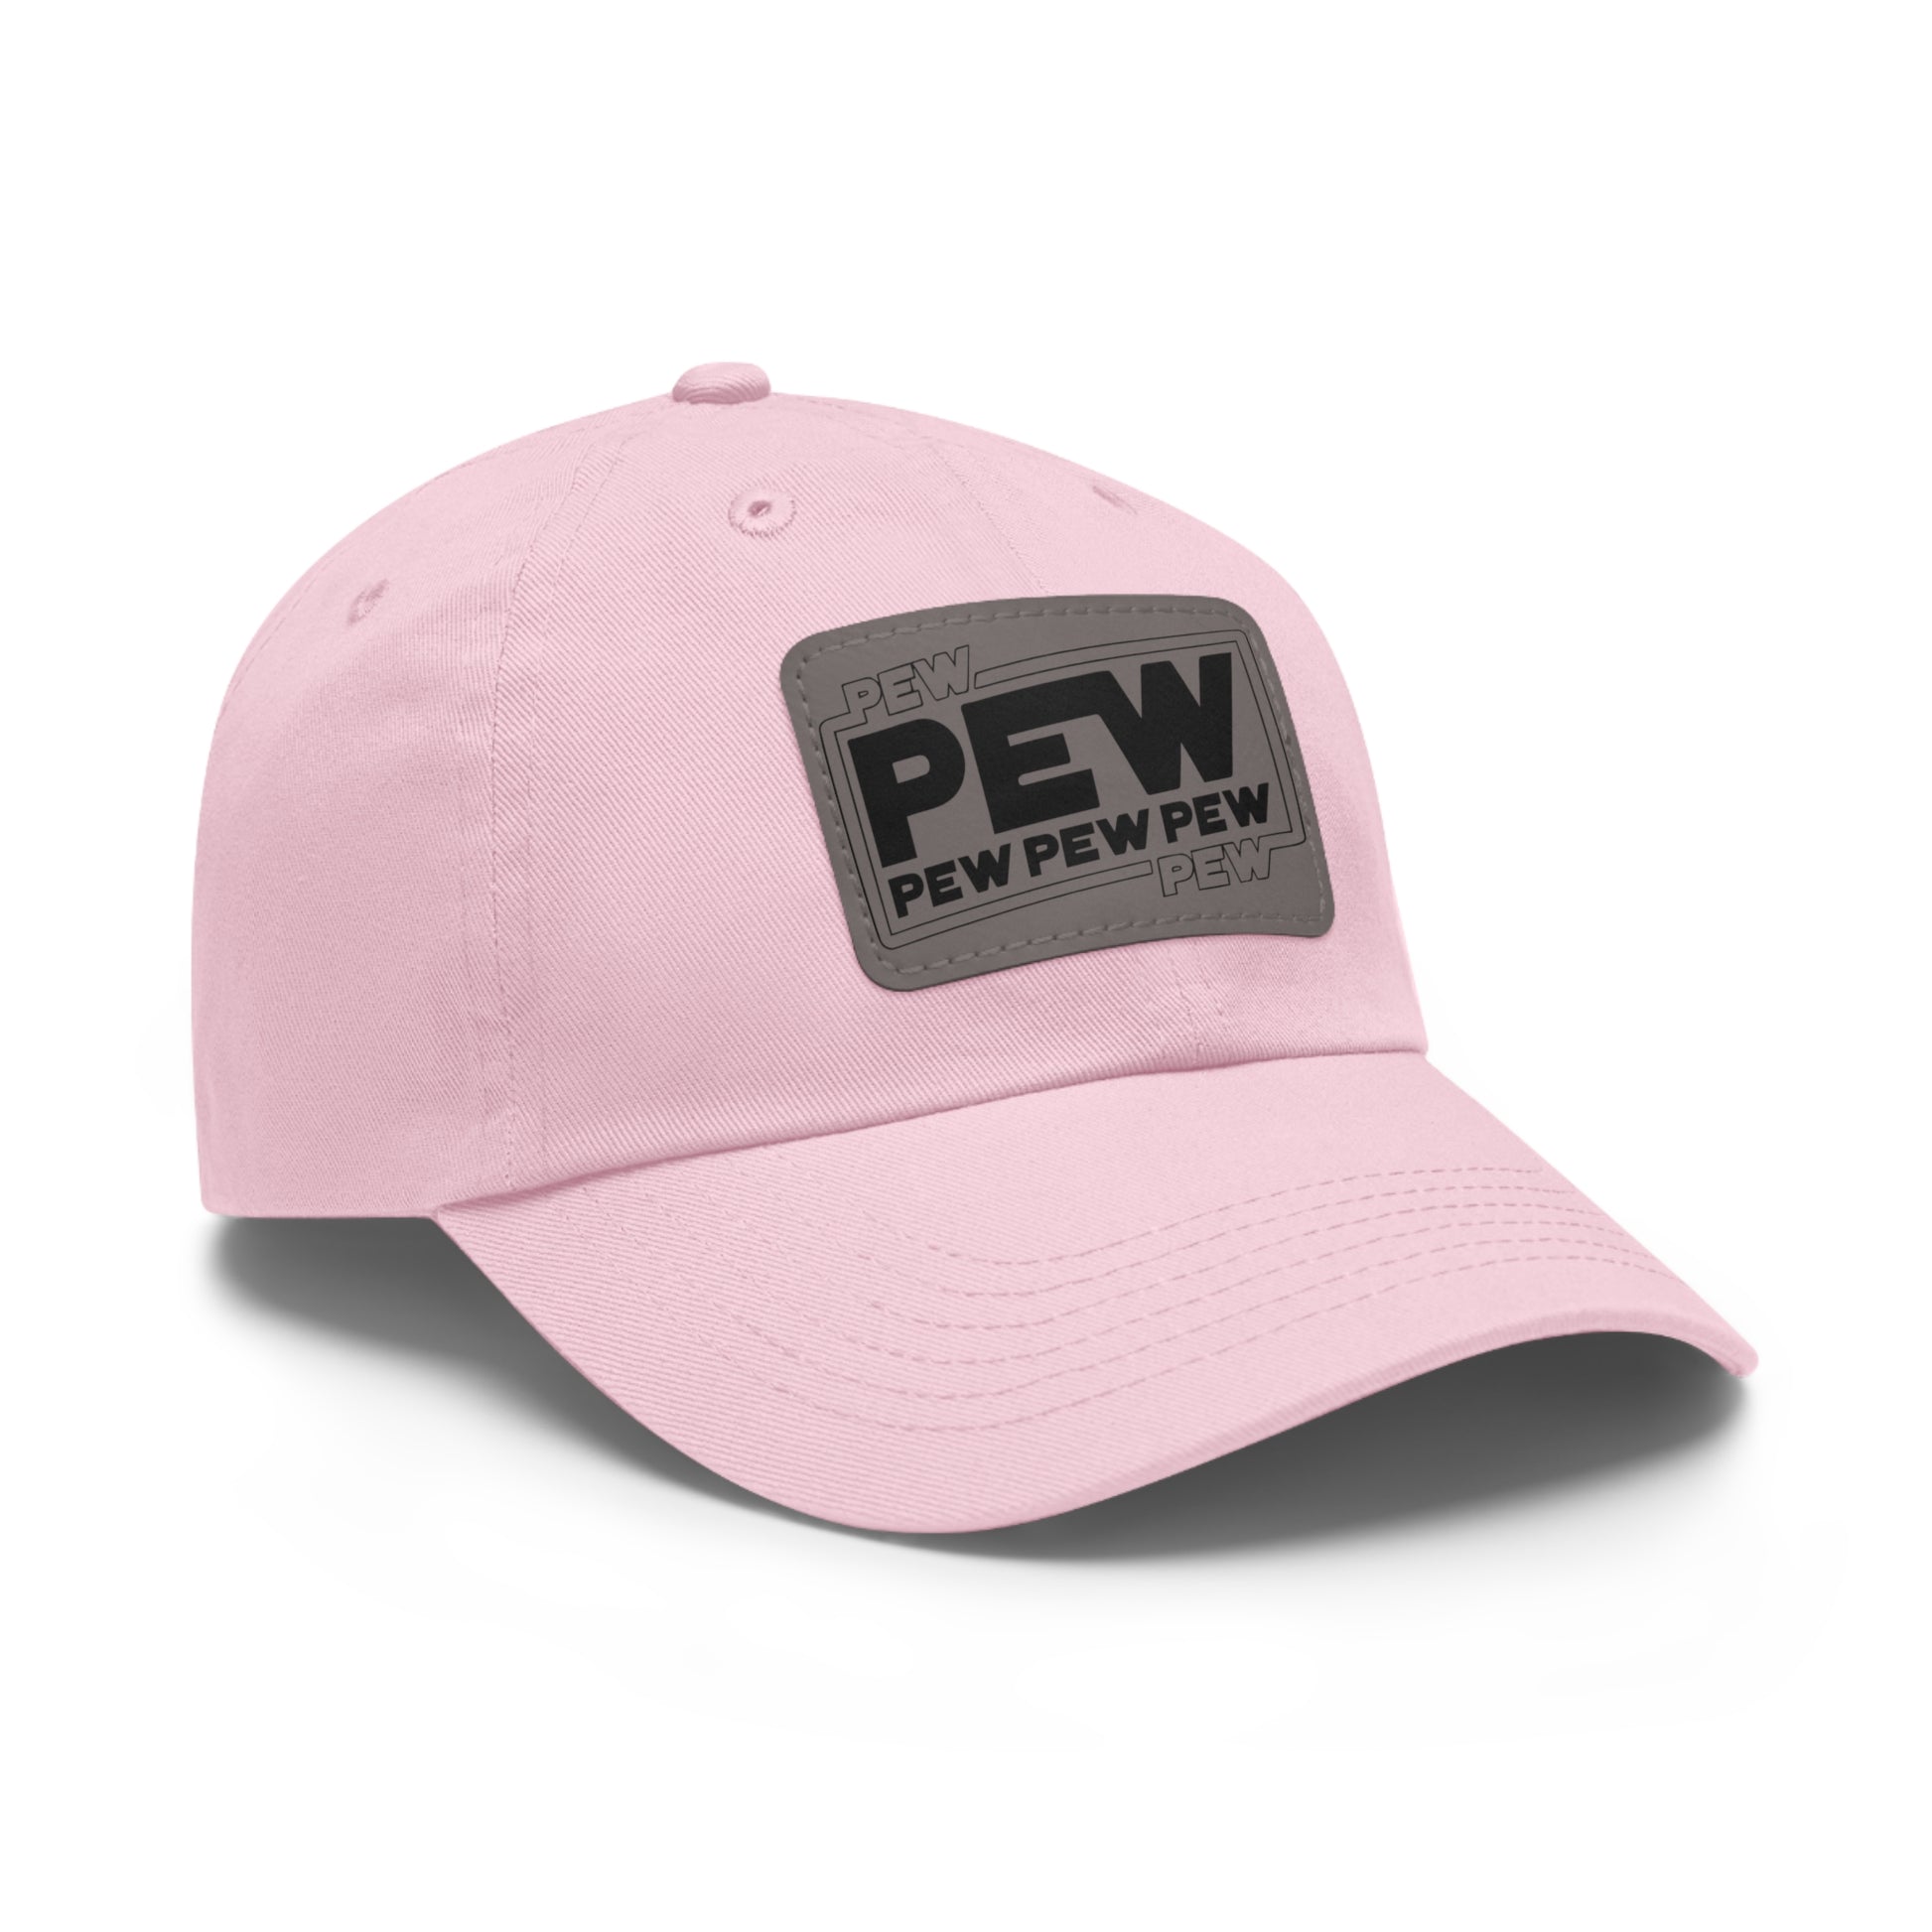 pew pew star wars hat